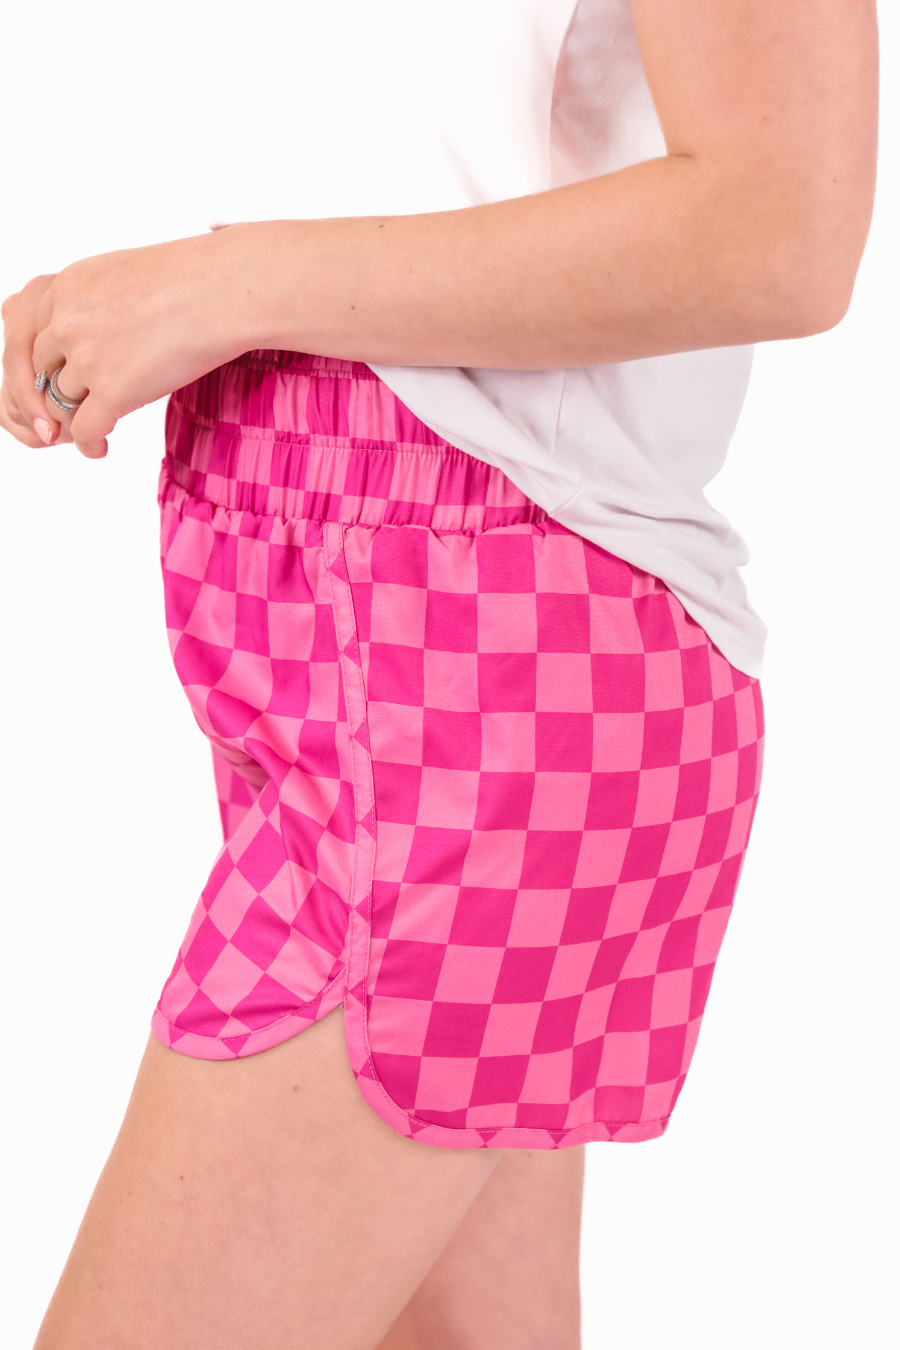 Vibe Check Checkered Shorts - Jess Lea Wholesale